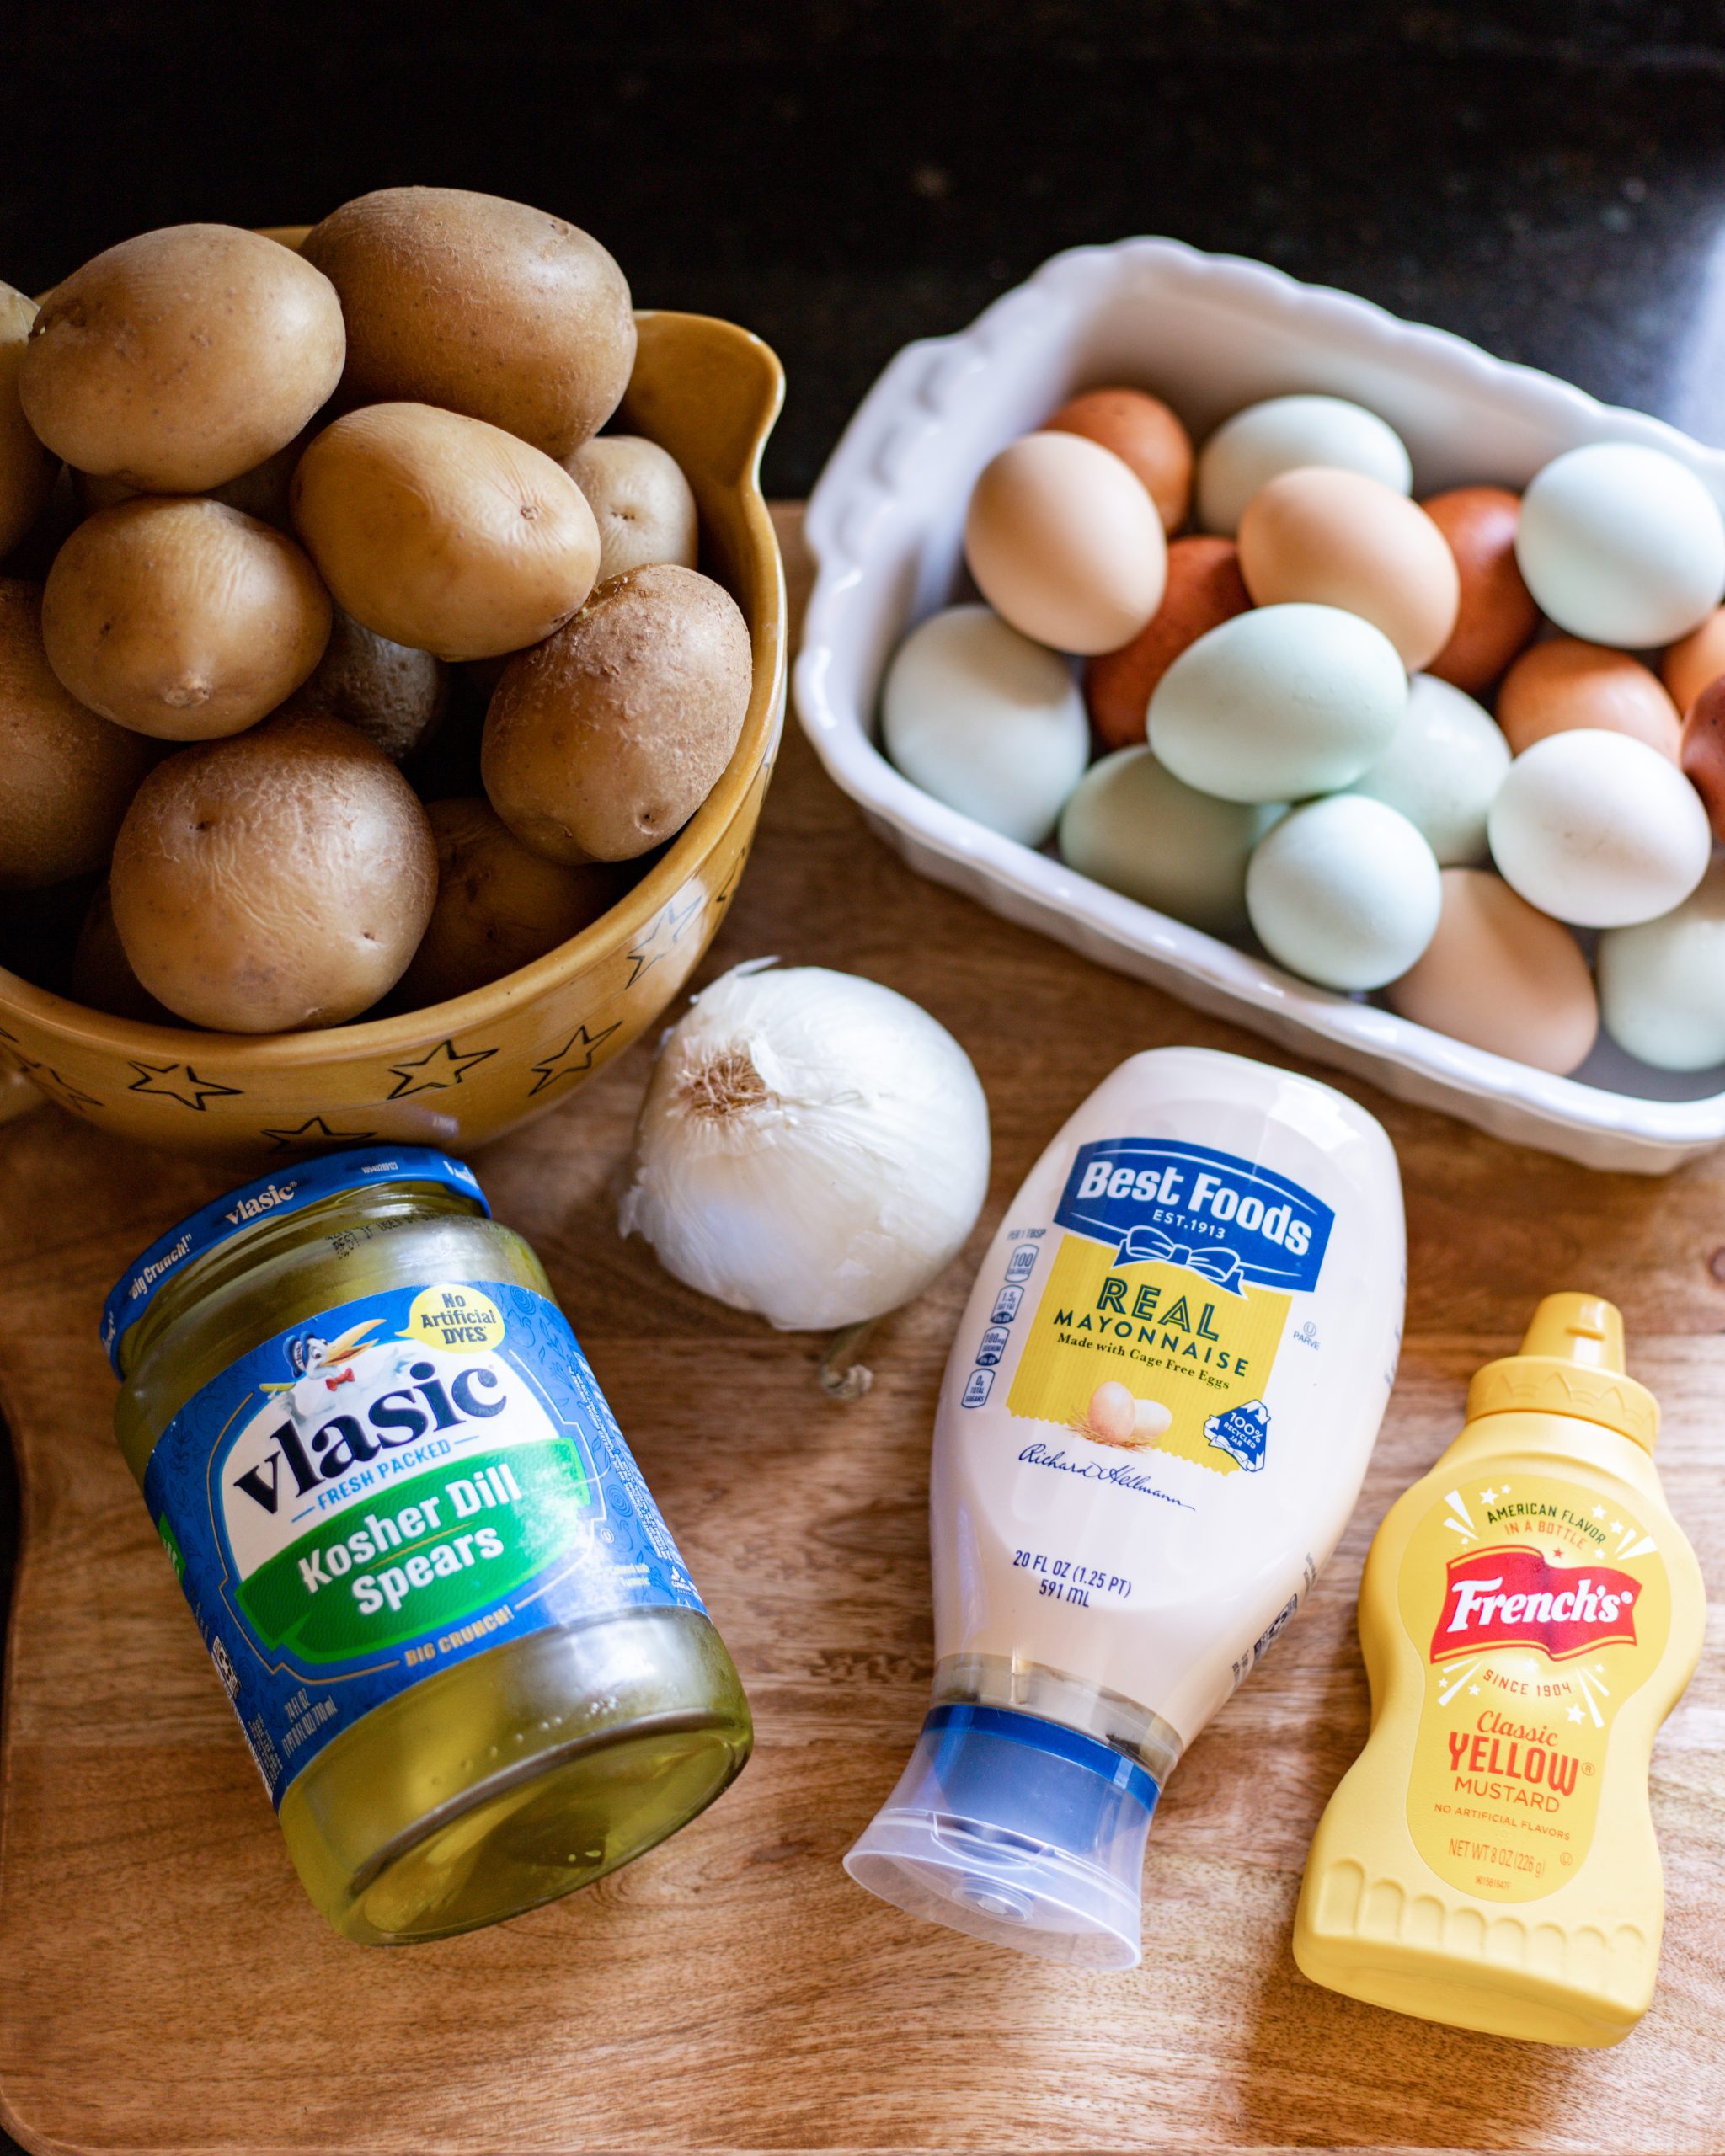 potato salad ingredients, best foods mayo, eggs, potatoes